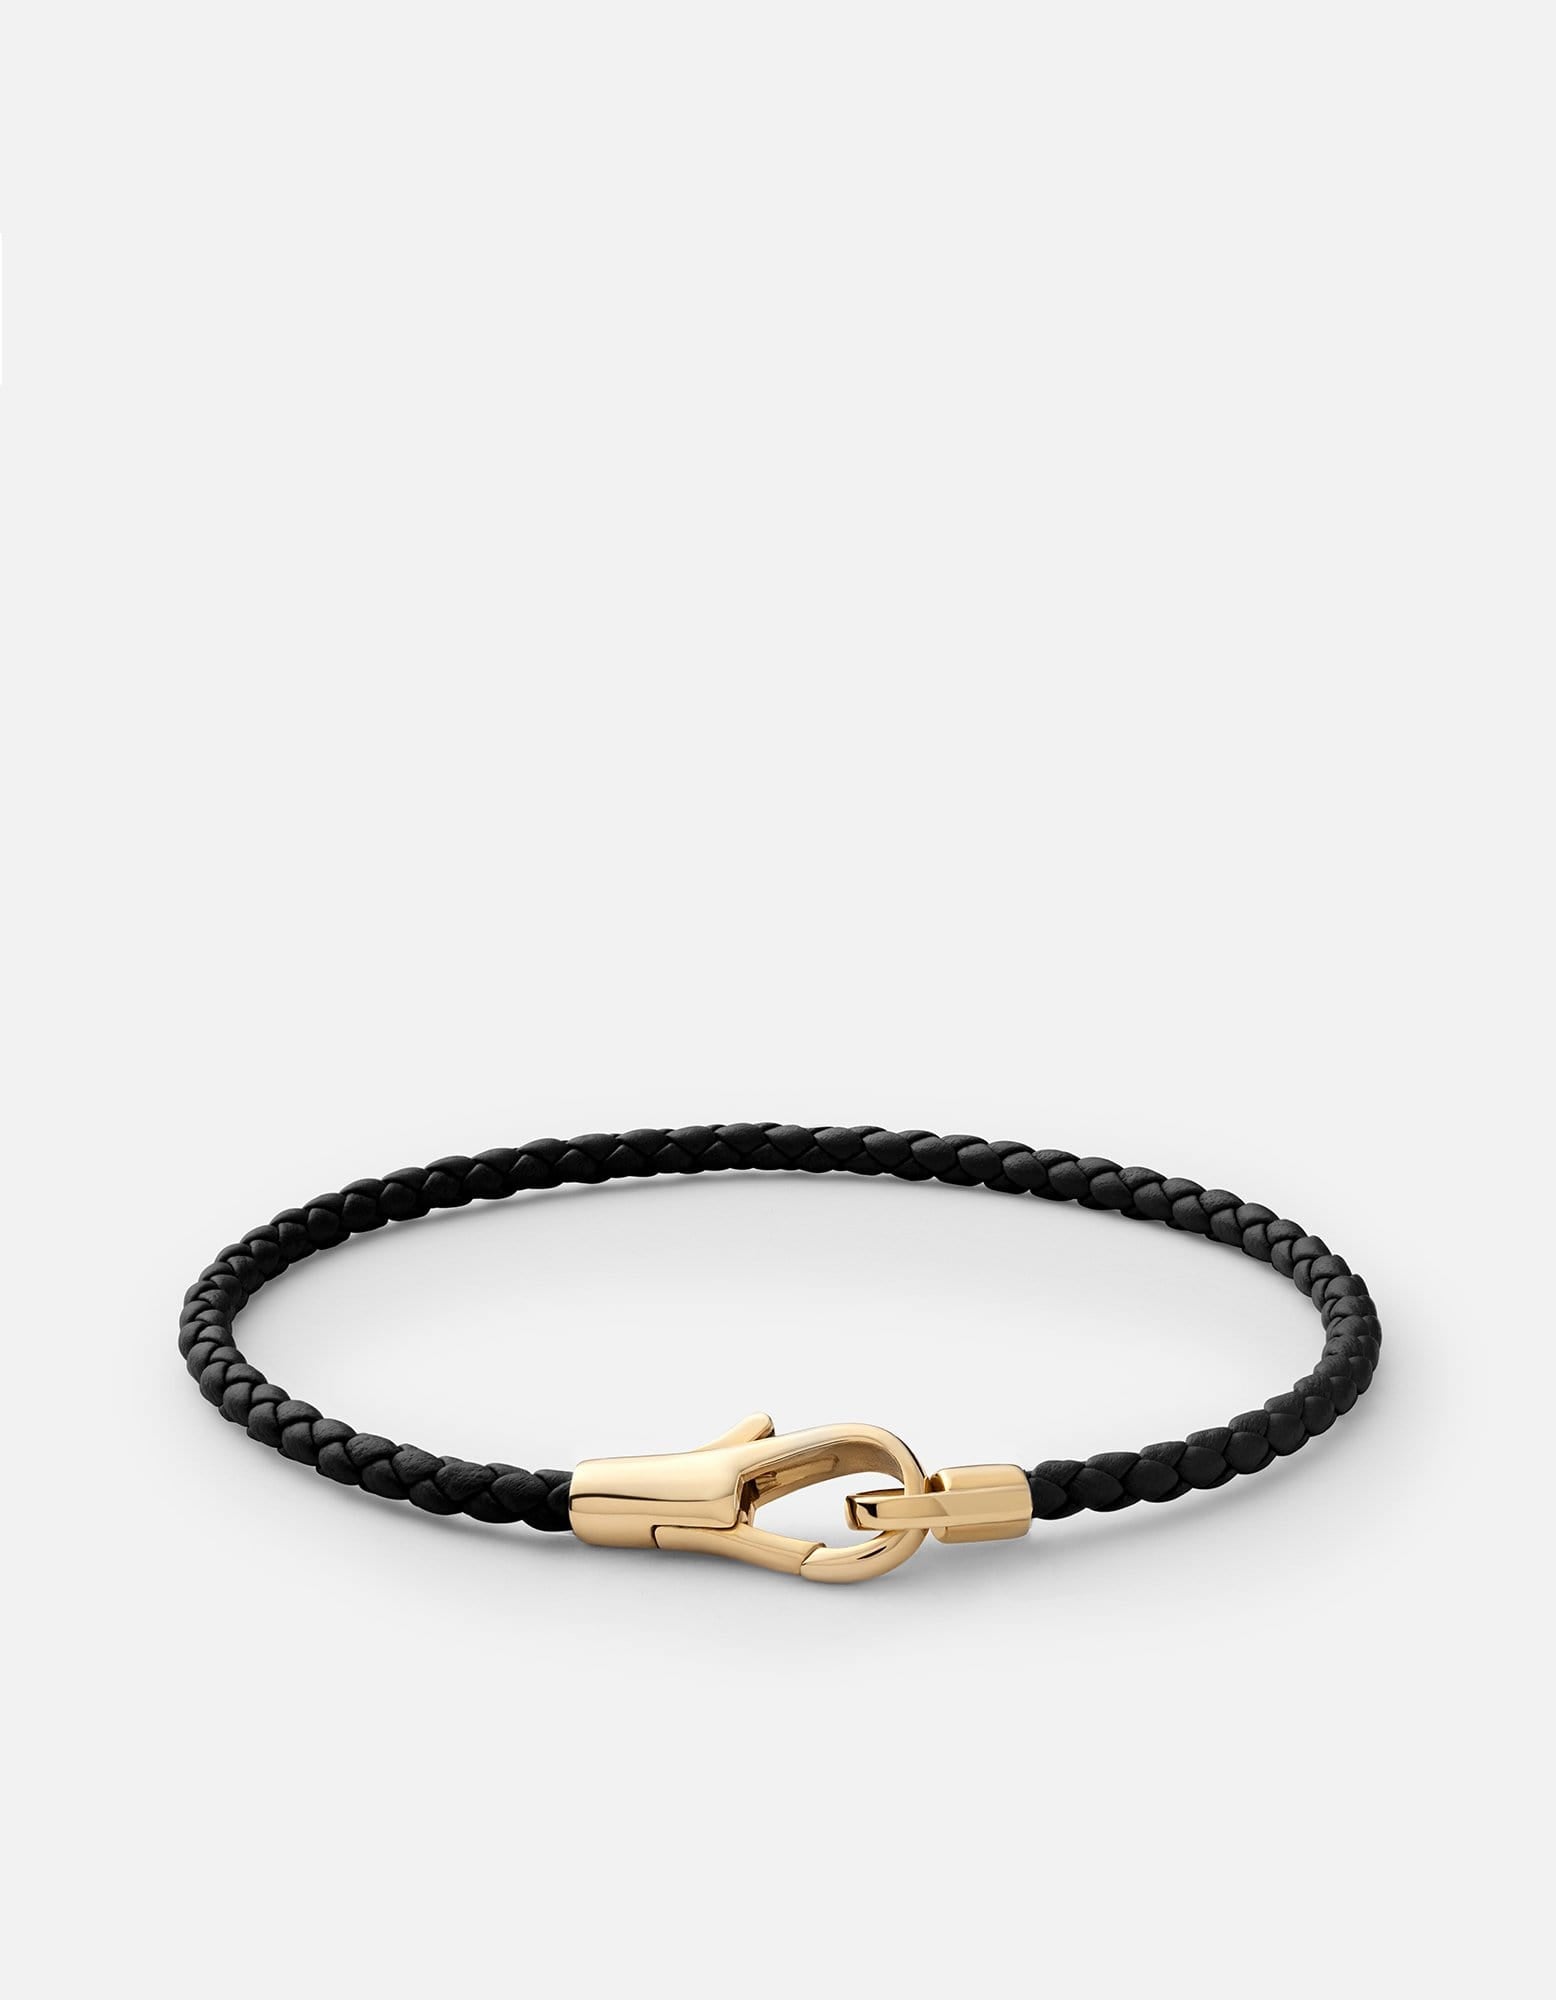 Nexus Leather Bracelet, Gold Vermeil, Polished, Men's Bracelets